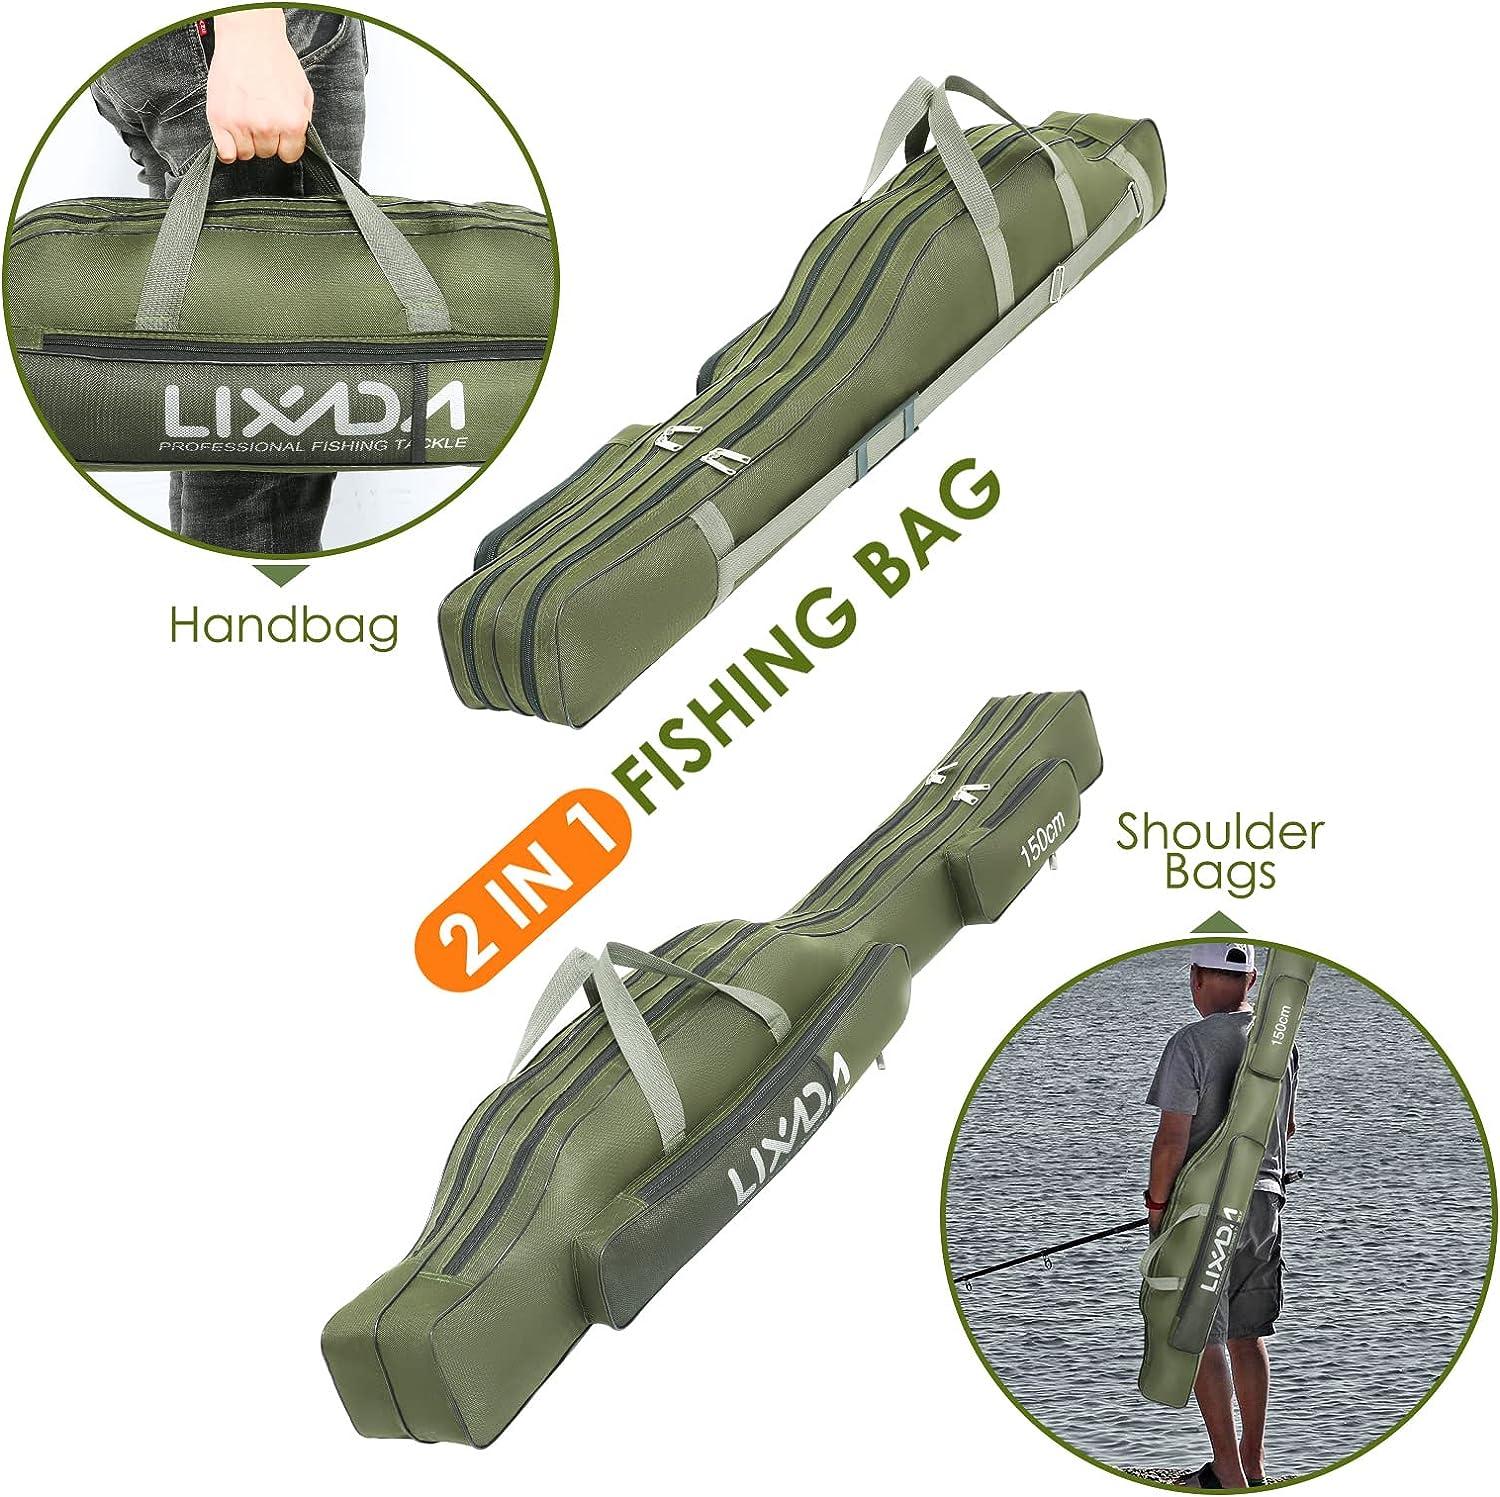 Fishing Rod Reel Bag Fishing Rod Storage Bag Portable Rod Tackle